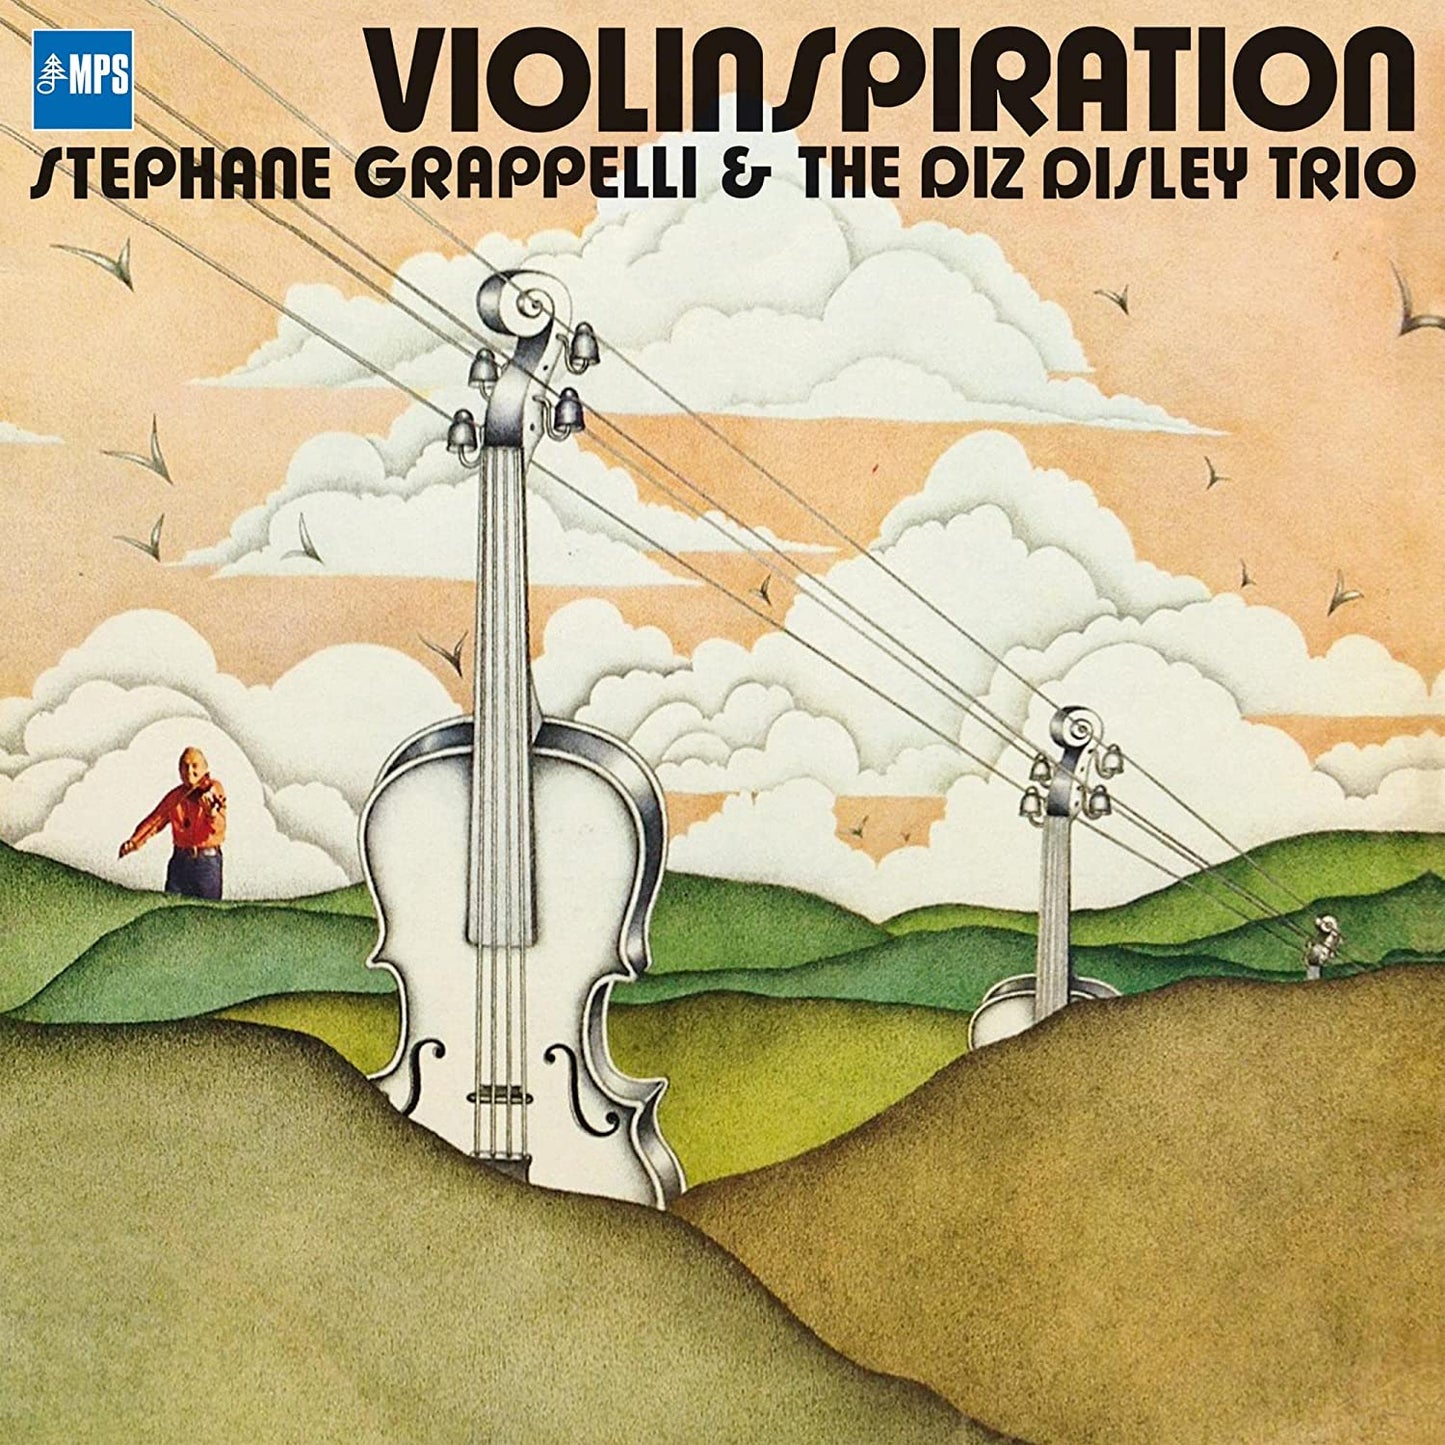 Stephane Grappelli - Violinspiration - CD